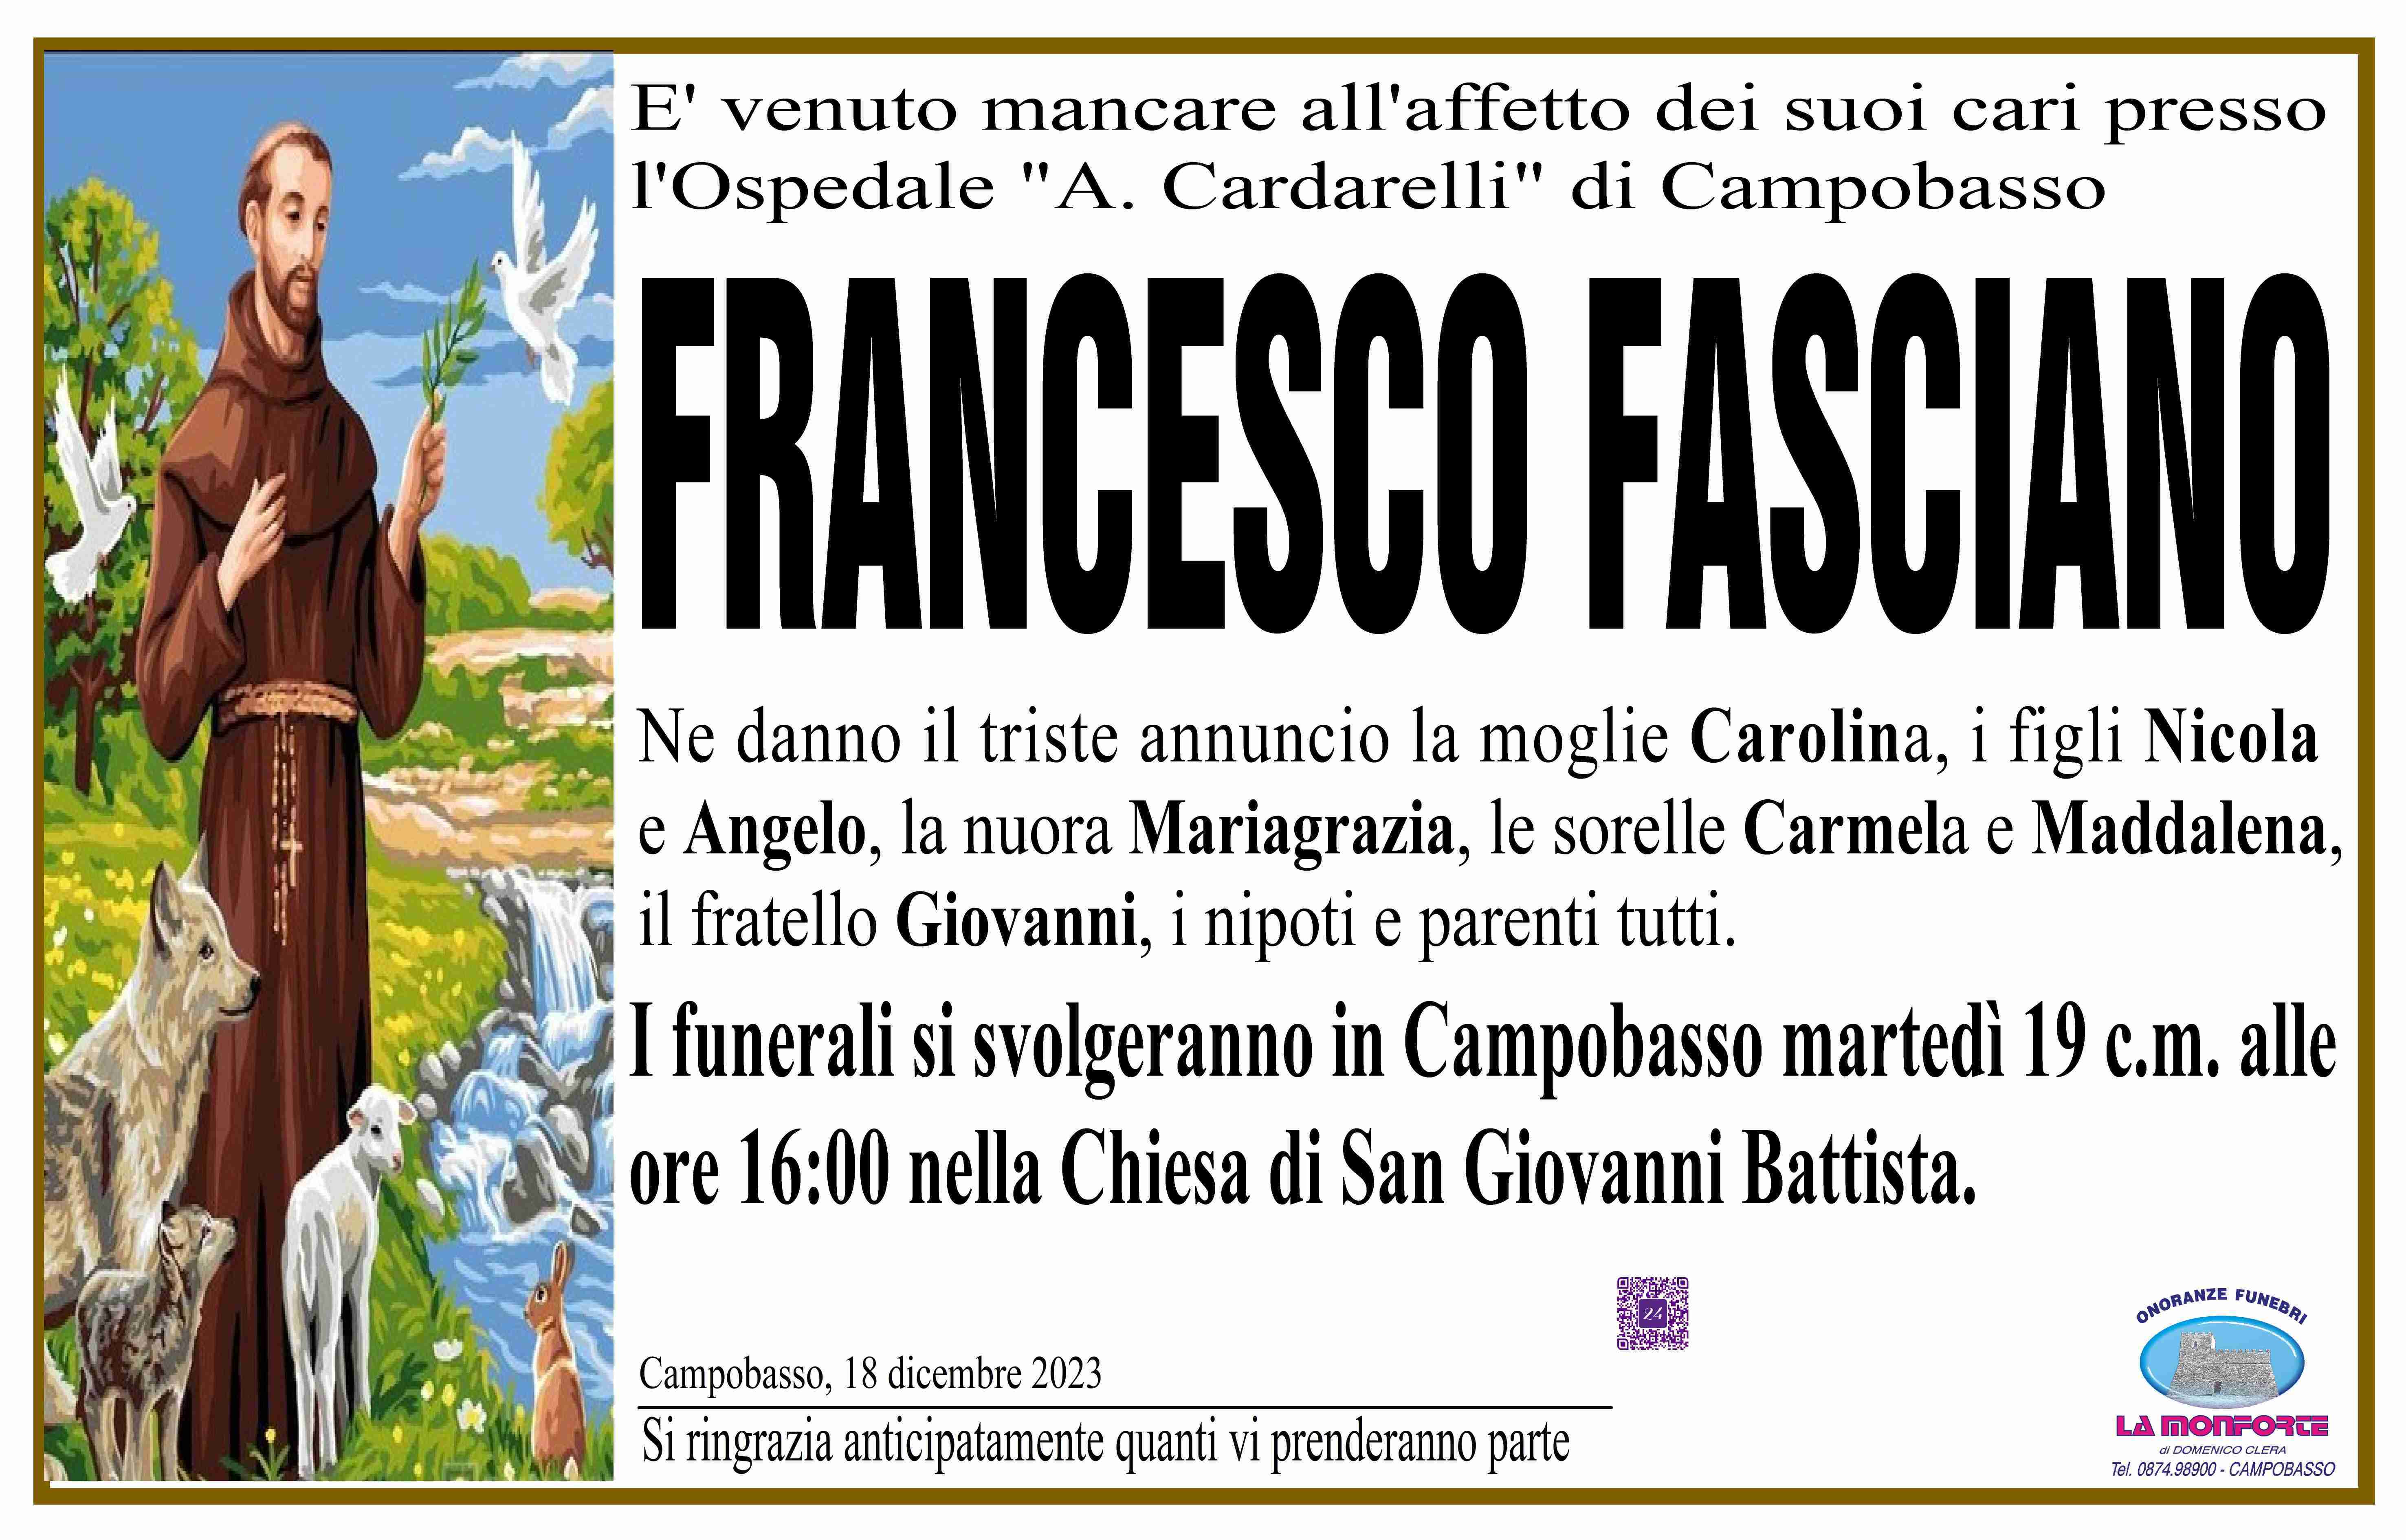 Francesco Fasciano